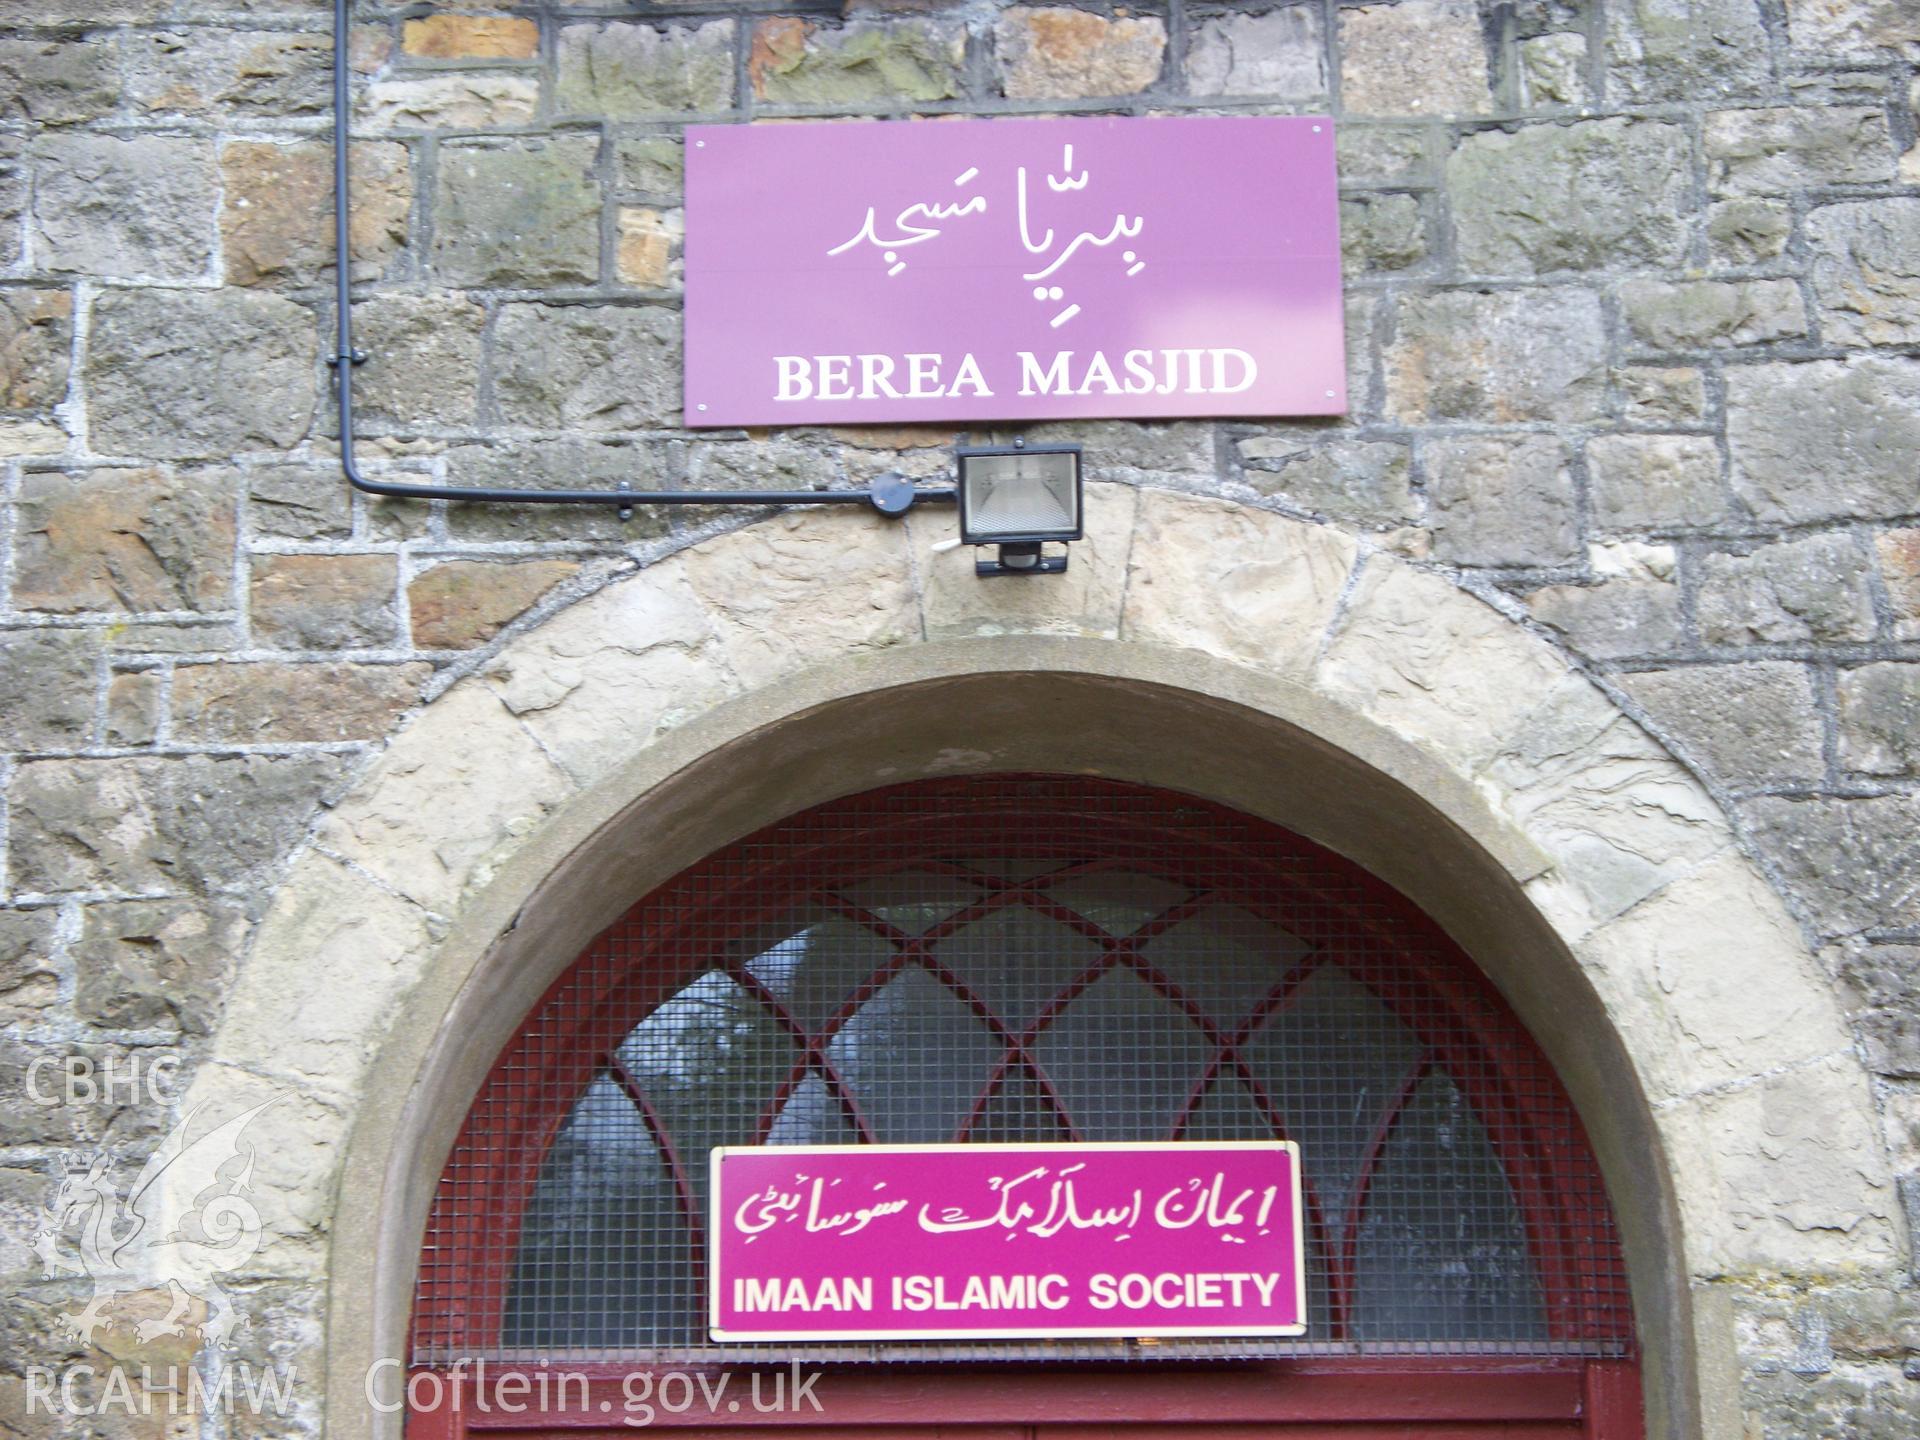 `Berea Masjid? & `Imaan Islamic Society? signs in Arabic and English over the main door.